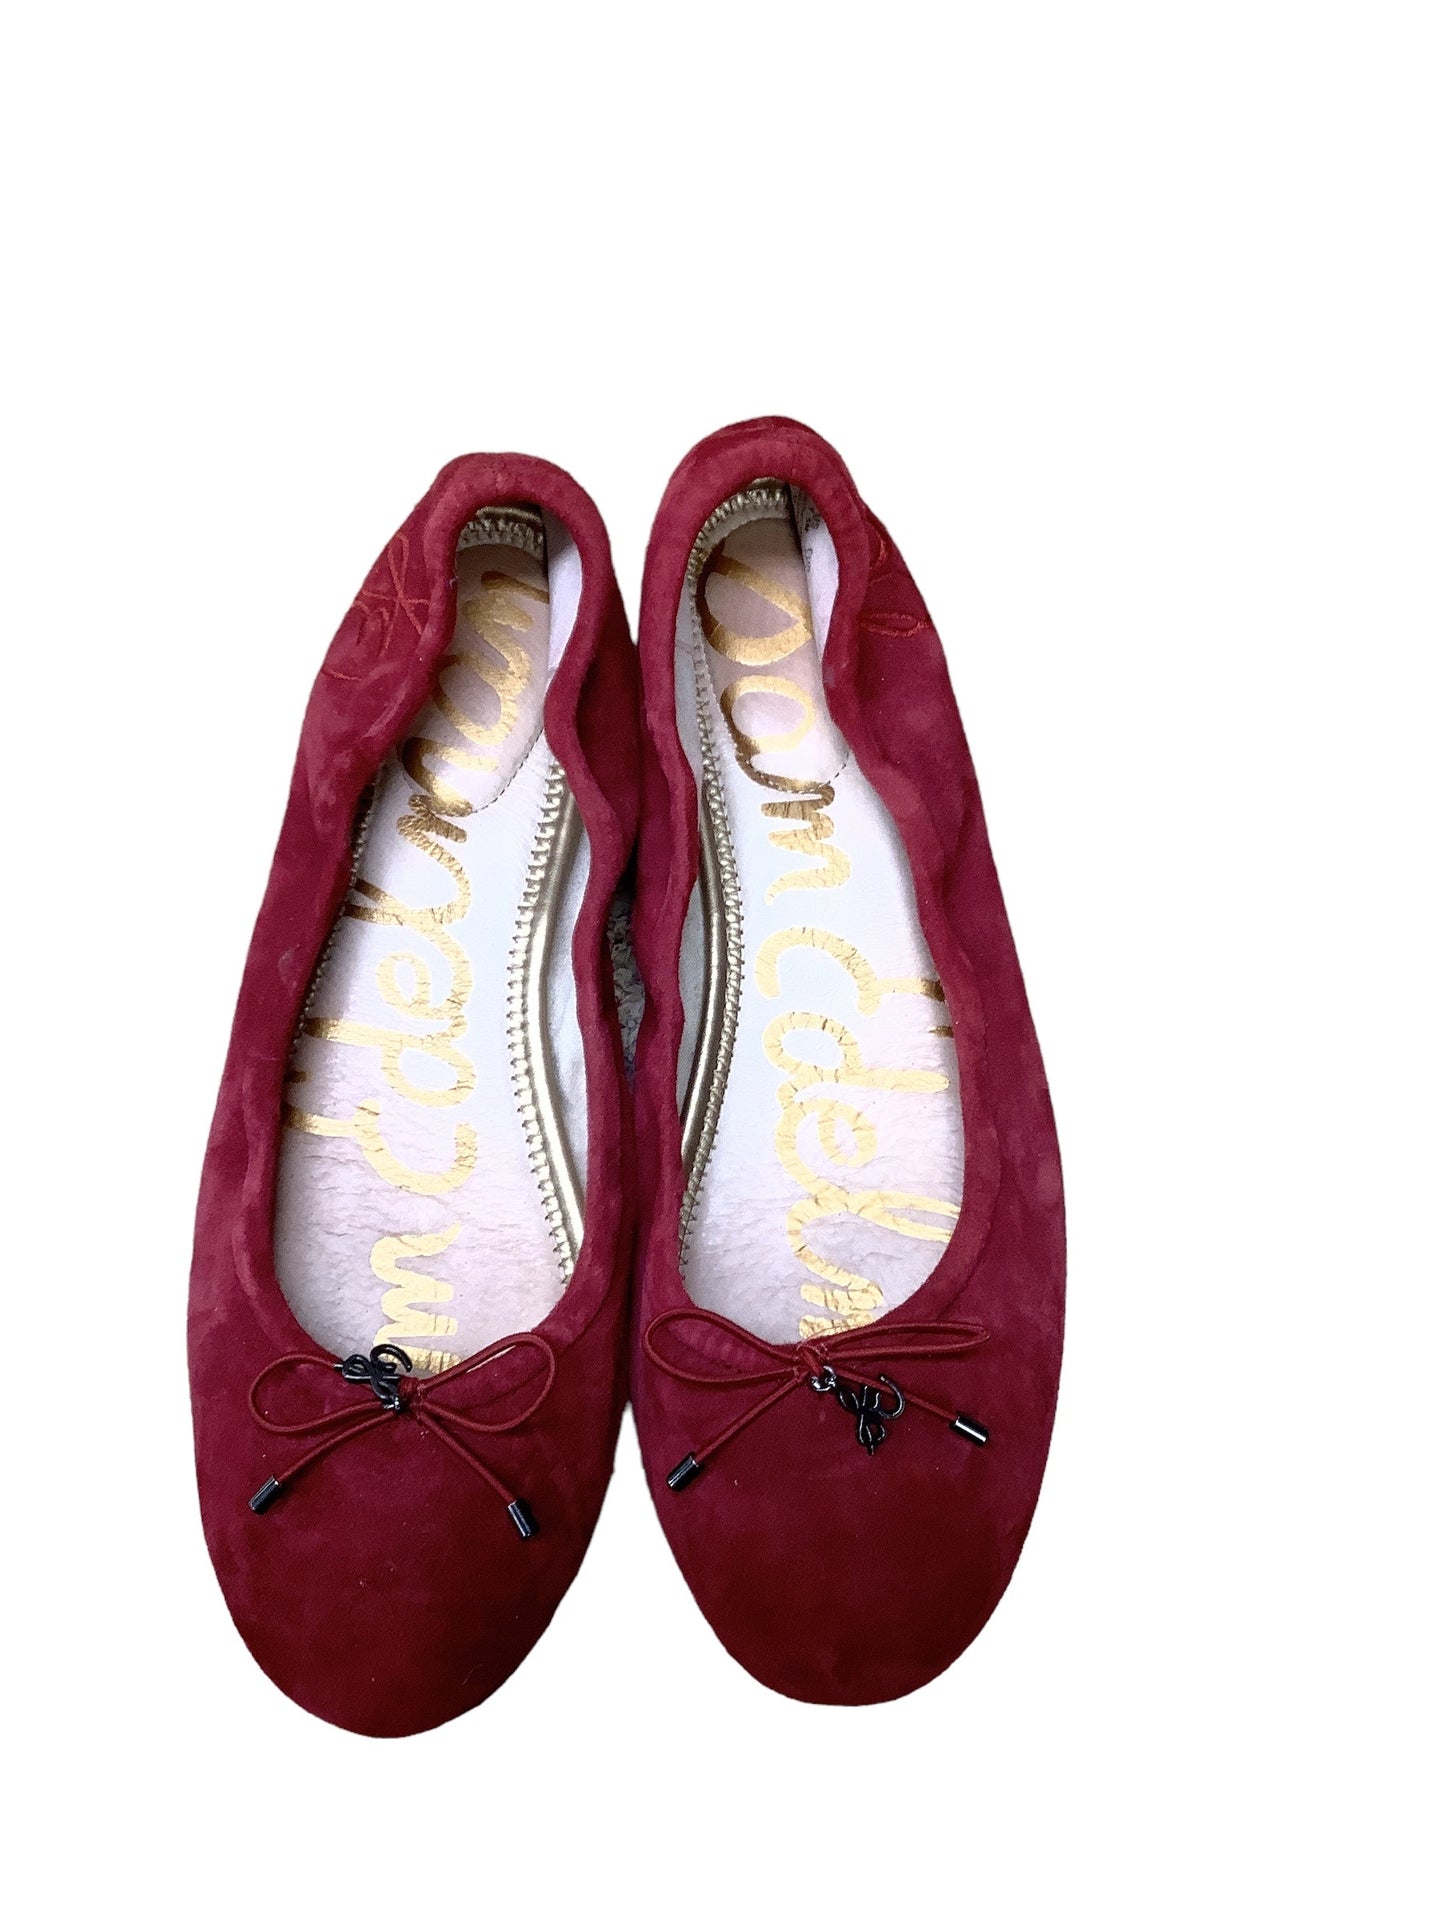 Shoes Flats By Sam Edelman  Size: 7.5